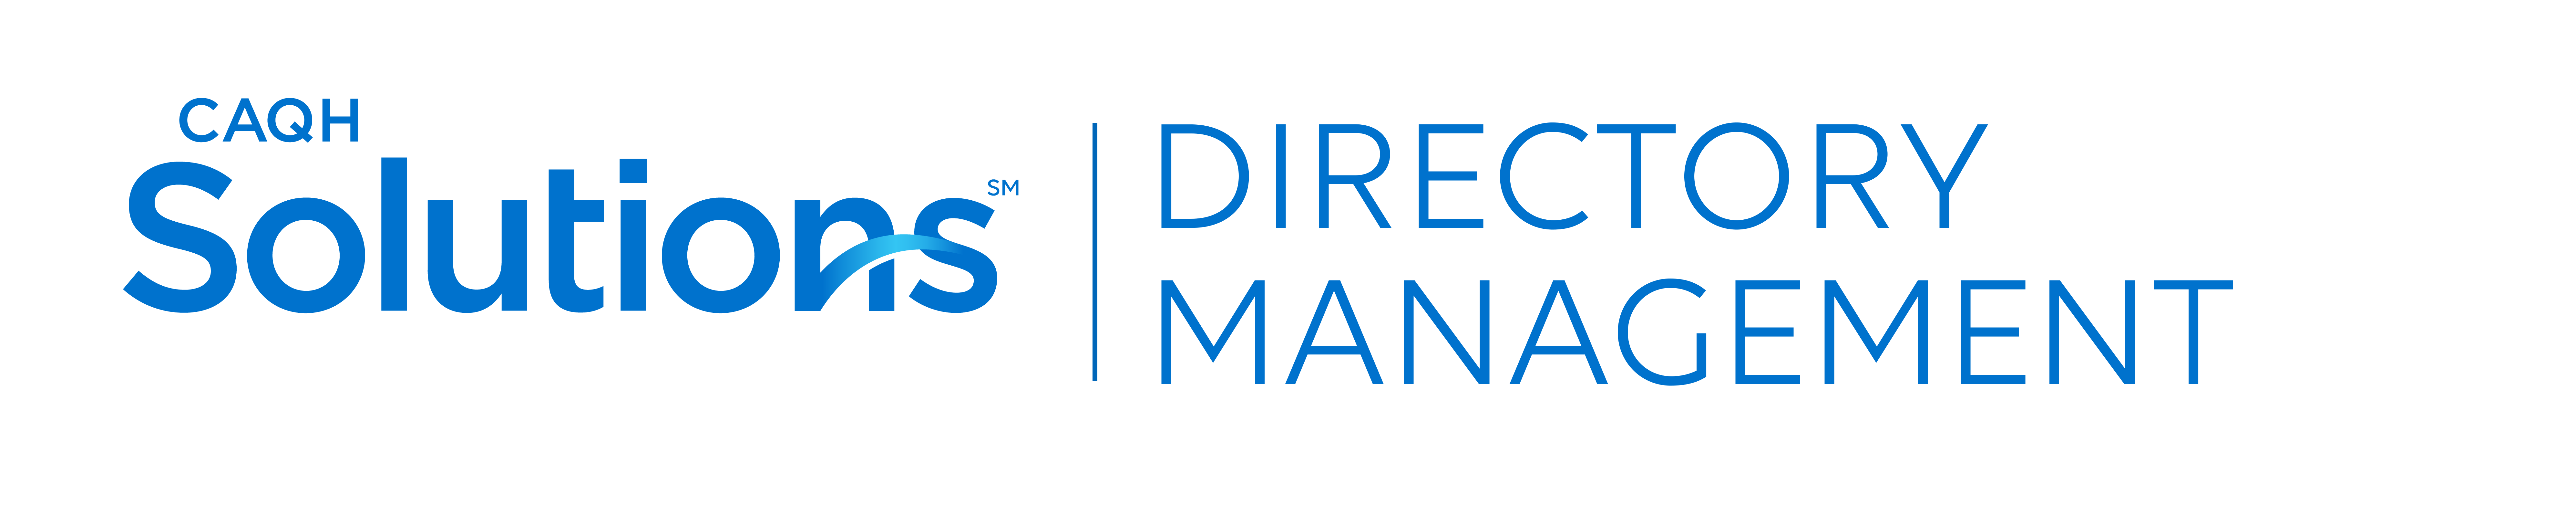 CAQH Directory Management Logo